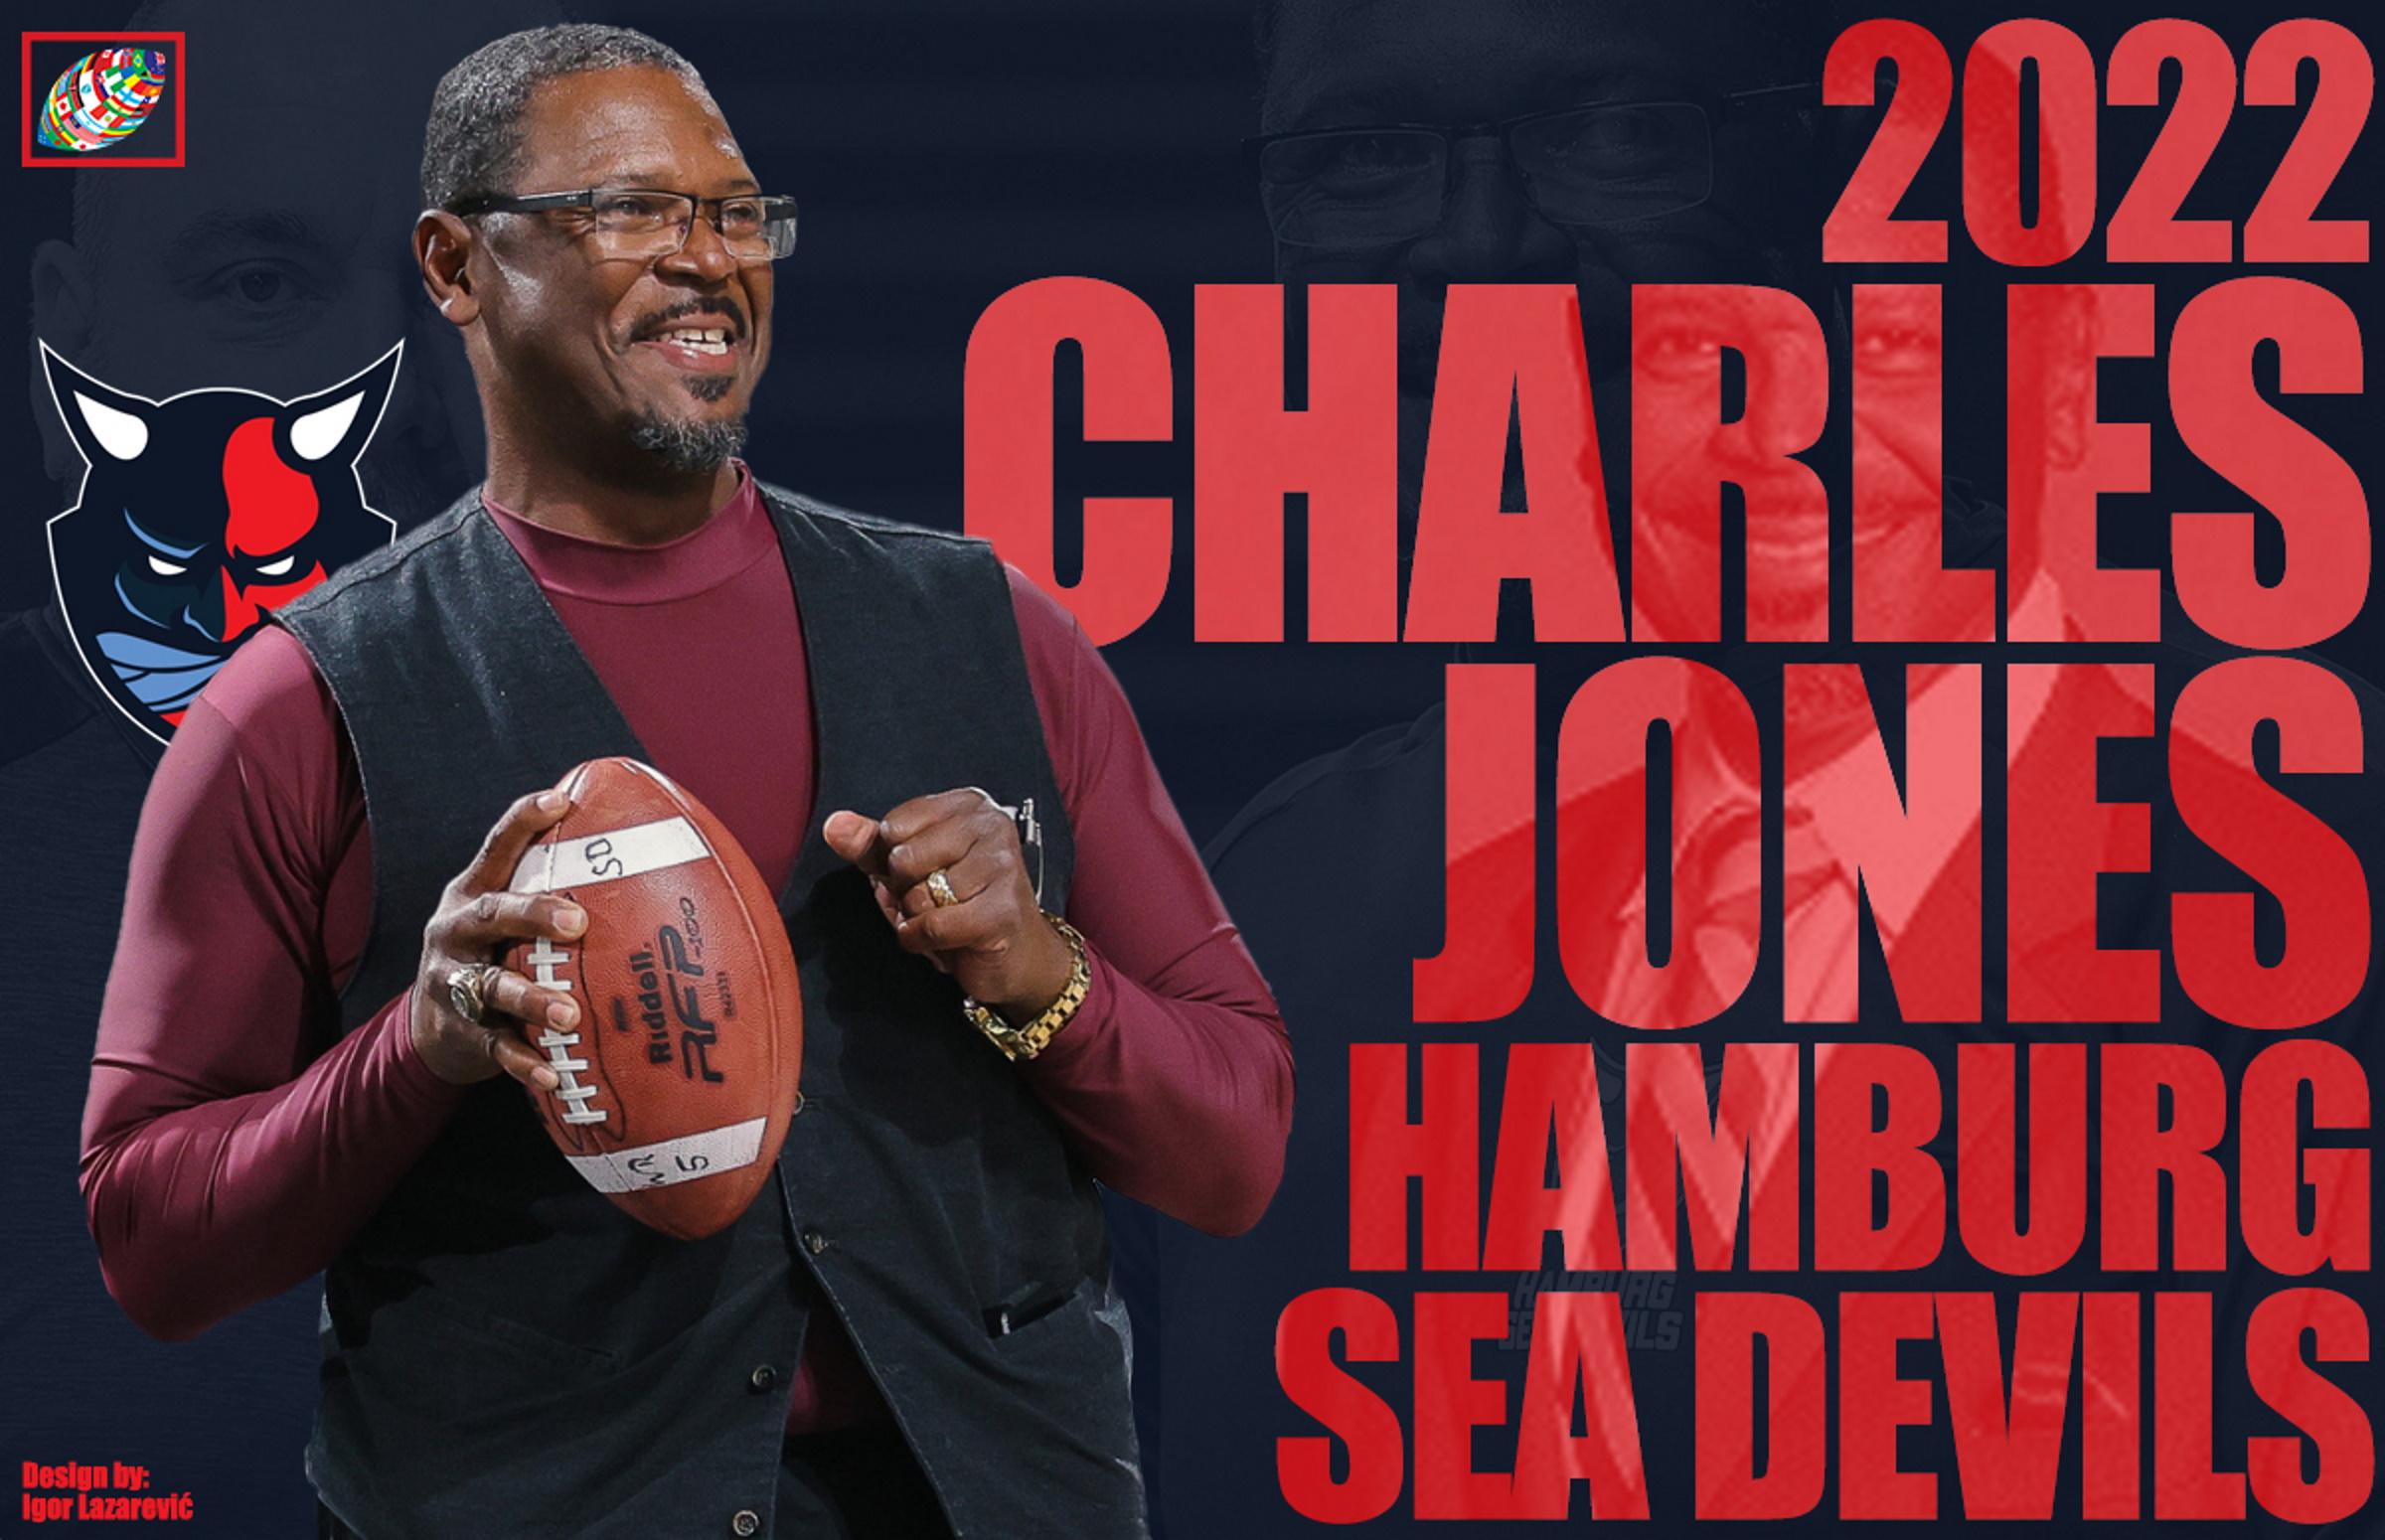 ELF Hamburg Sea Devils sign Charles Jones as new HC